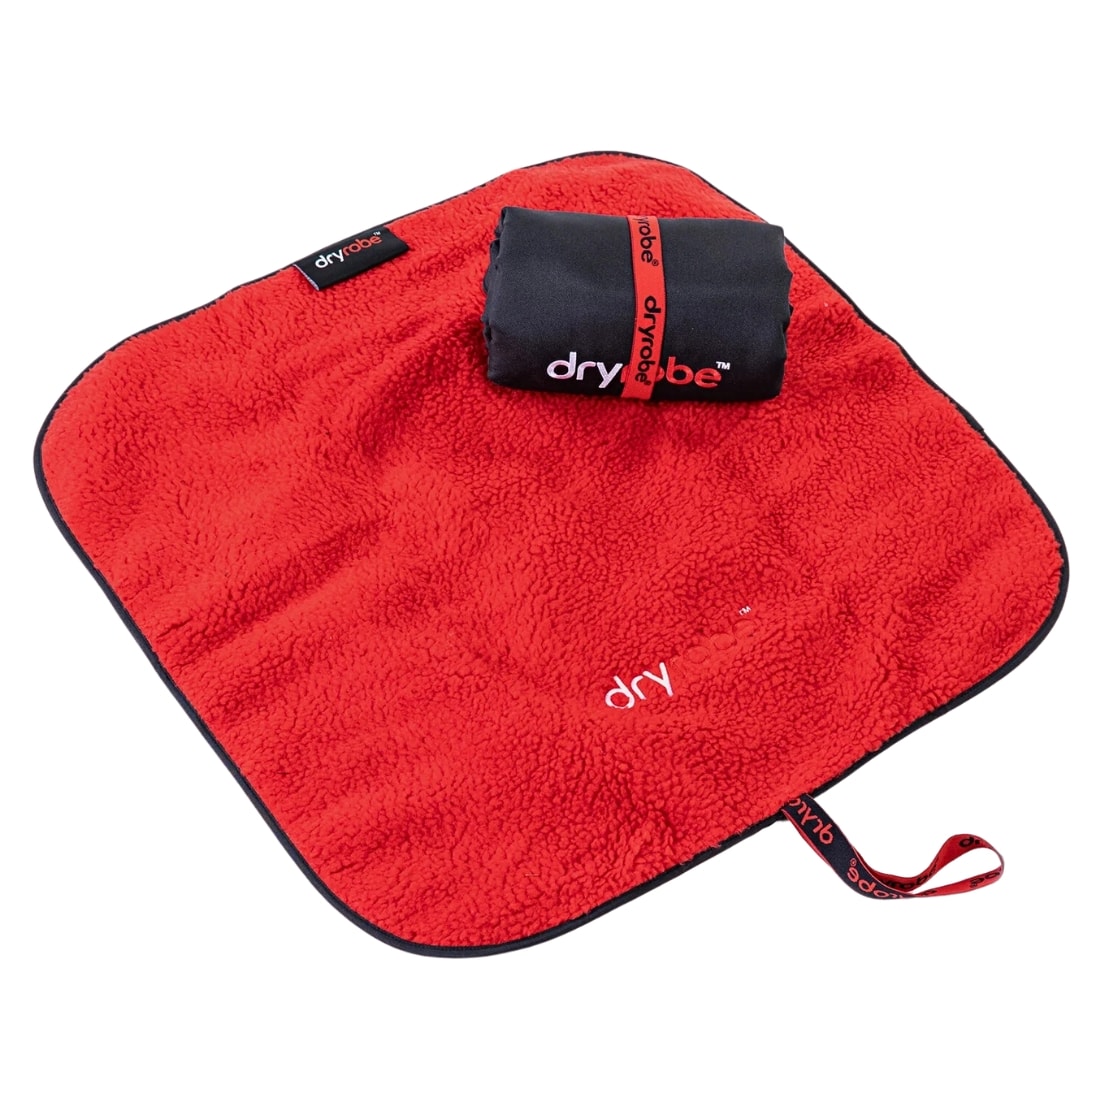 Dryrobe Changing Mat - Black Red - Wetsuit Change Mat by Dryrobe 60cm x 60cm